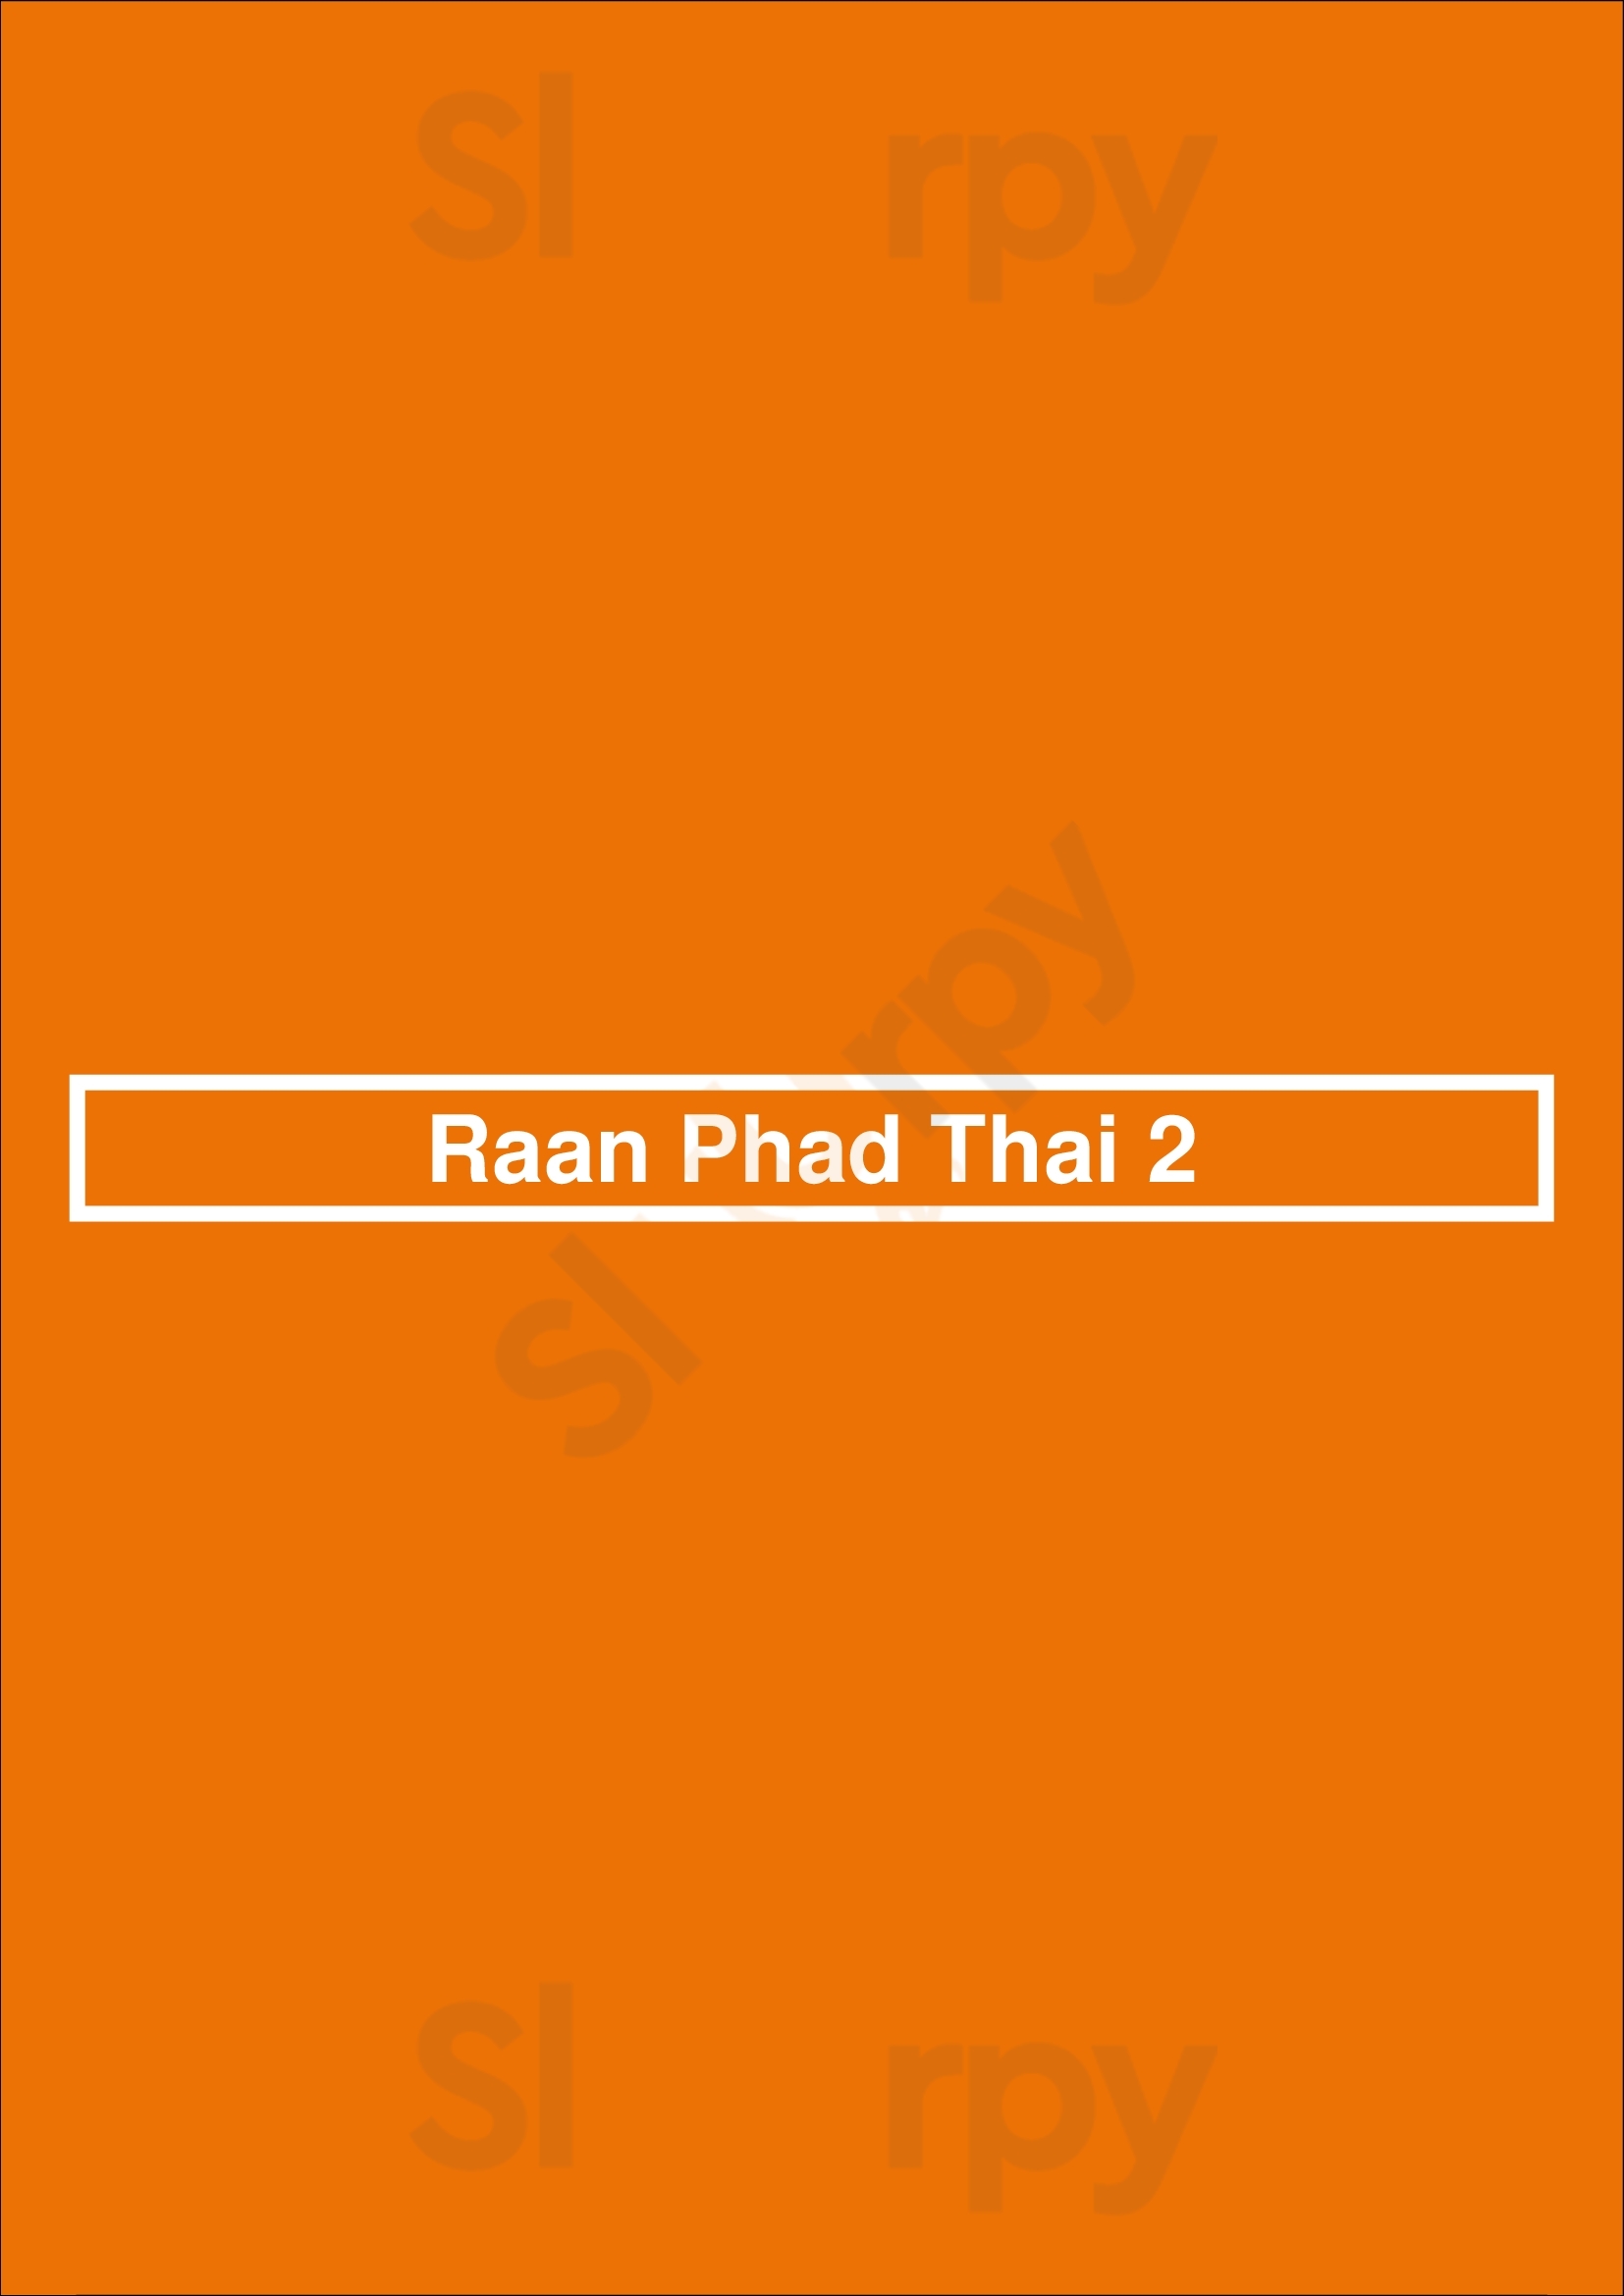 Raan Phad Thai 2 Amsterdam Menu - 1